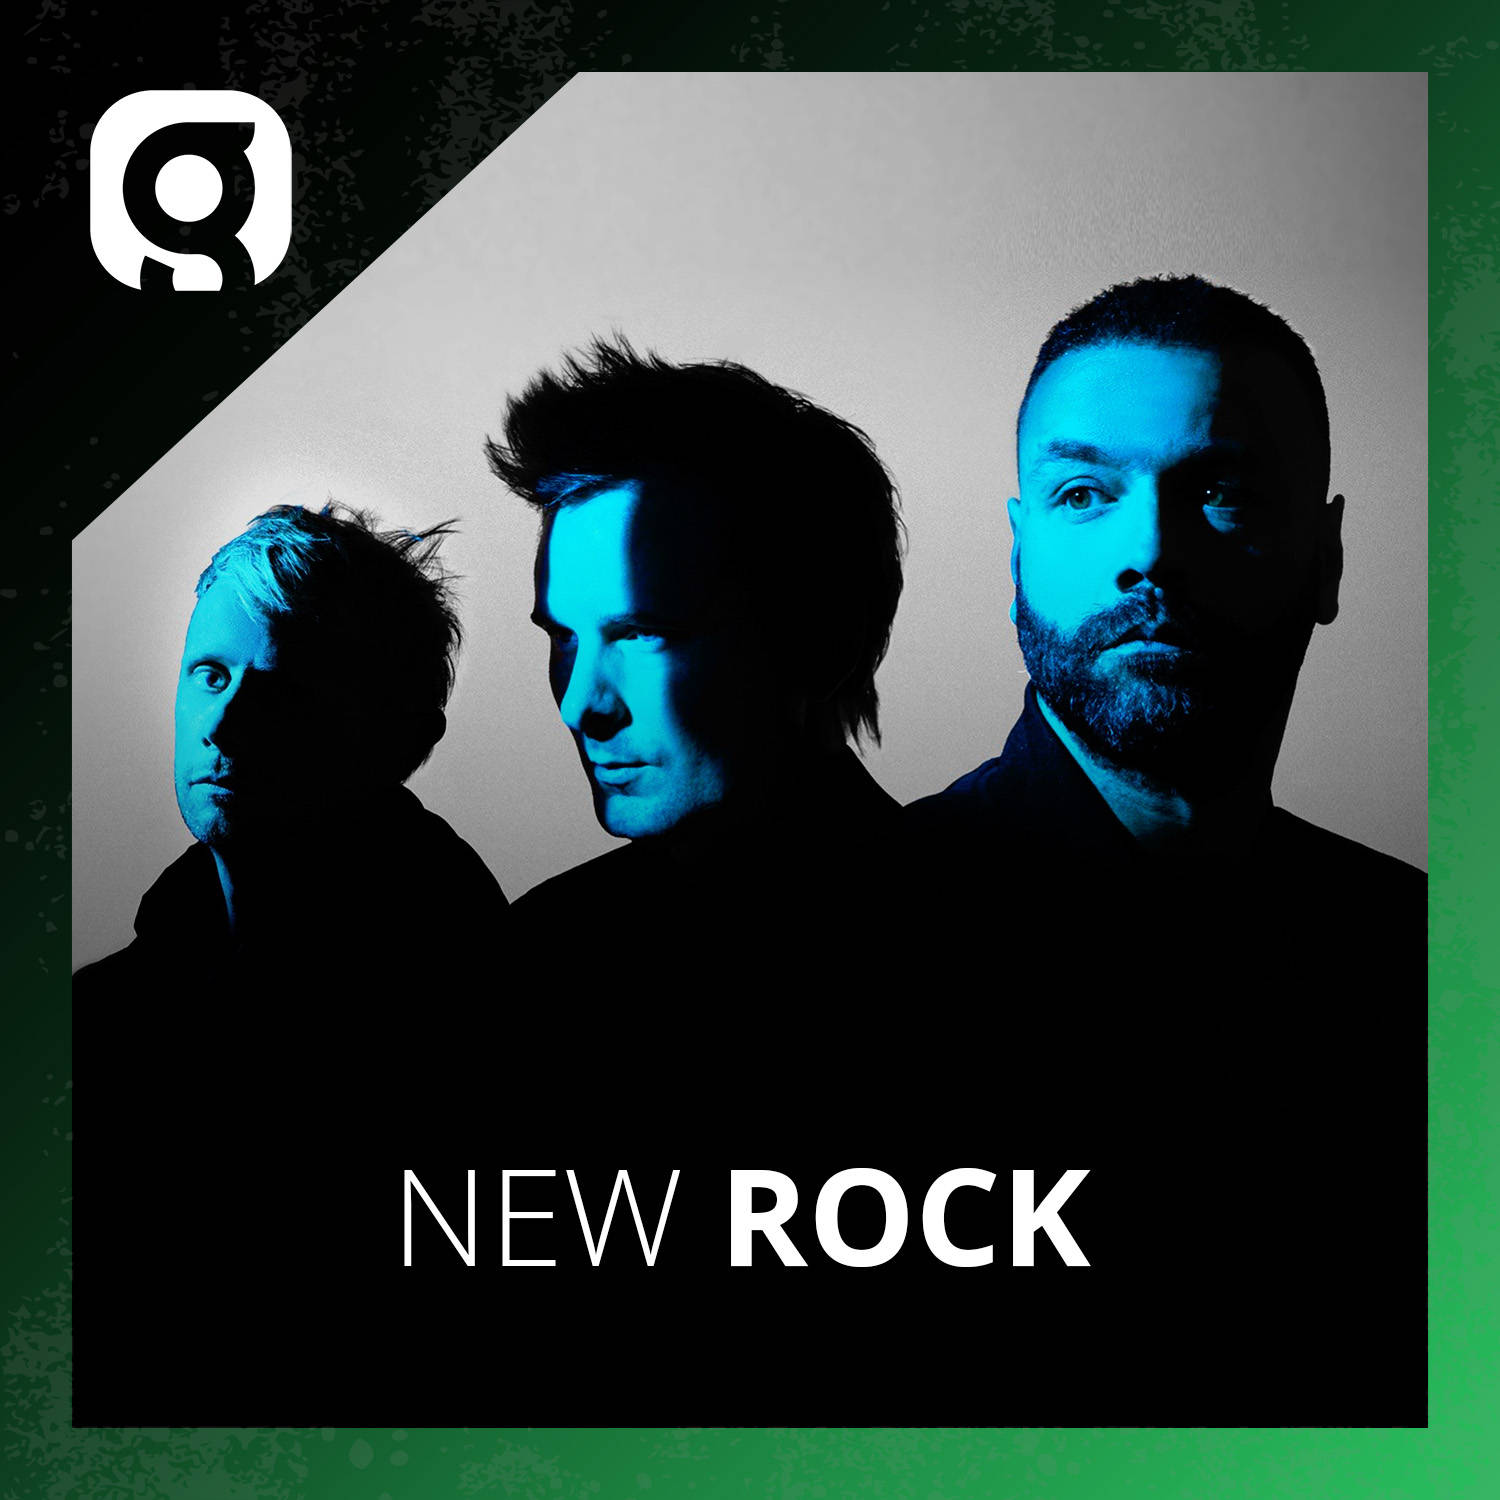 New Rock image